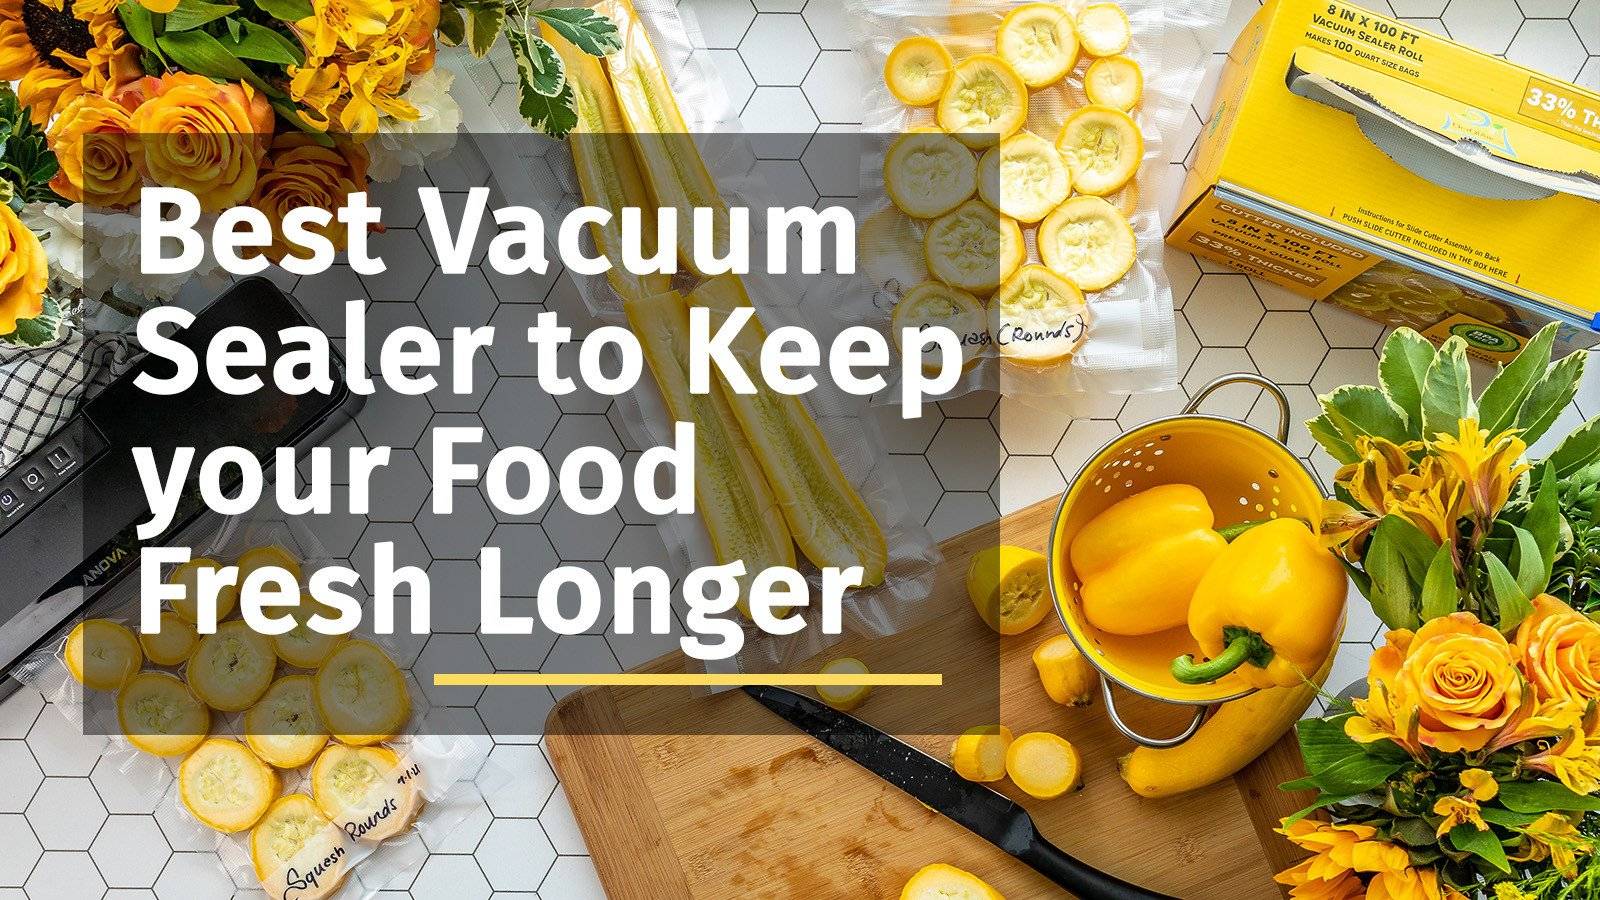 The Best Vacuum Sealer to Keep your Food Fresh Longer